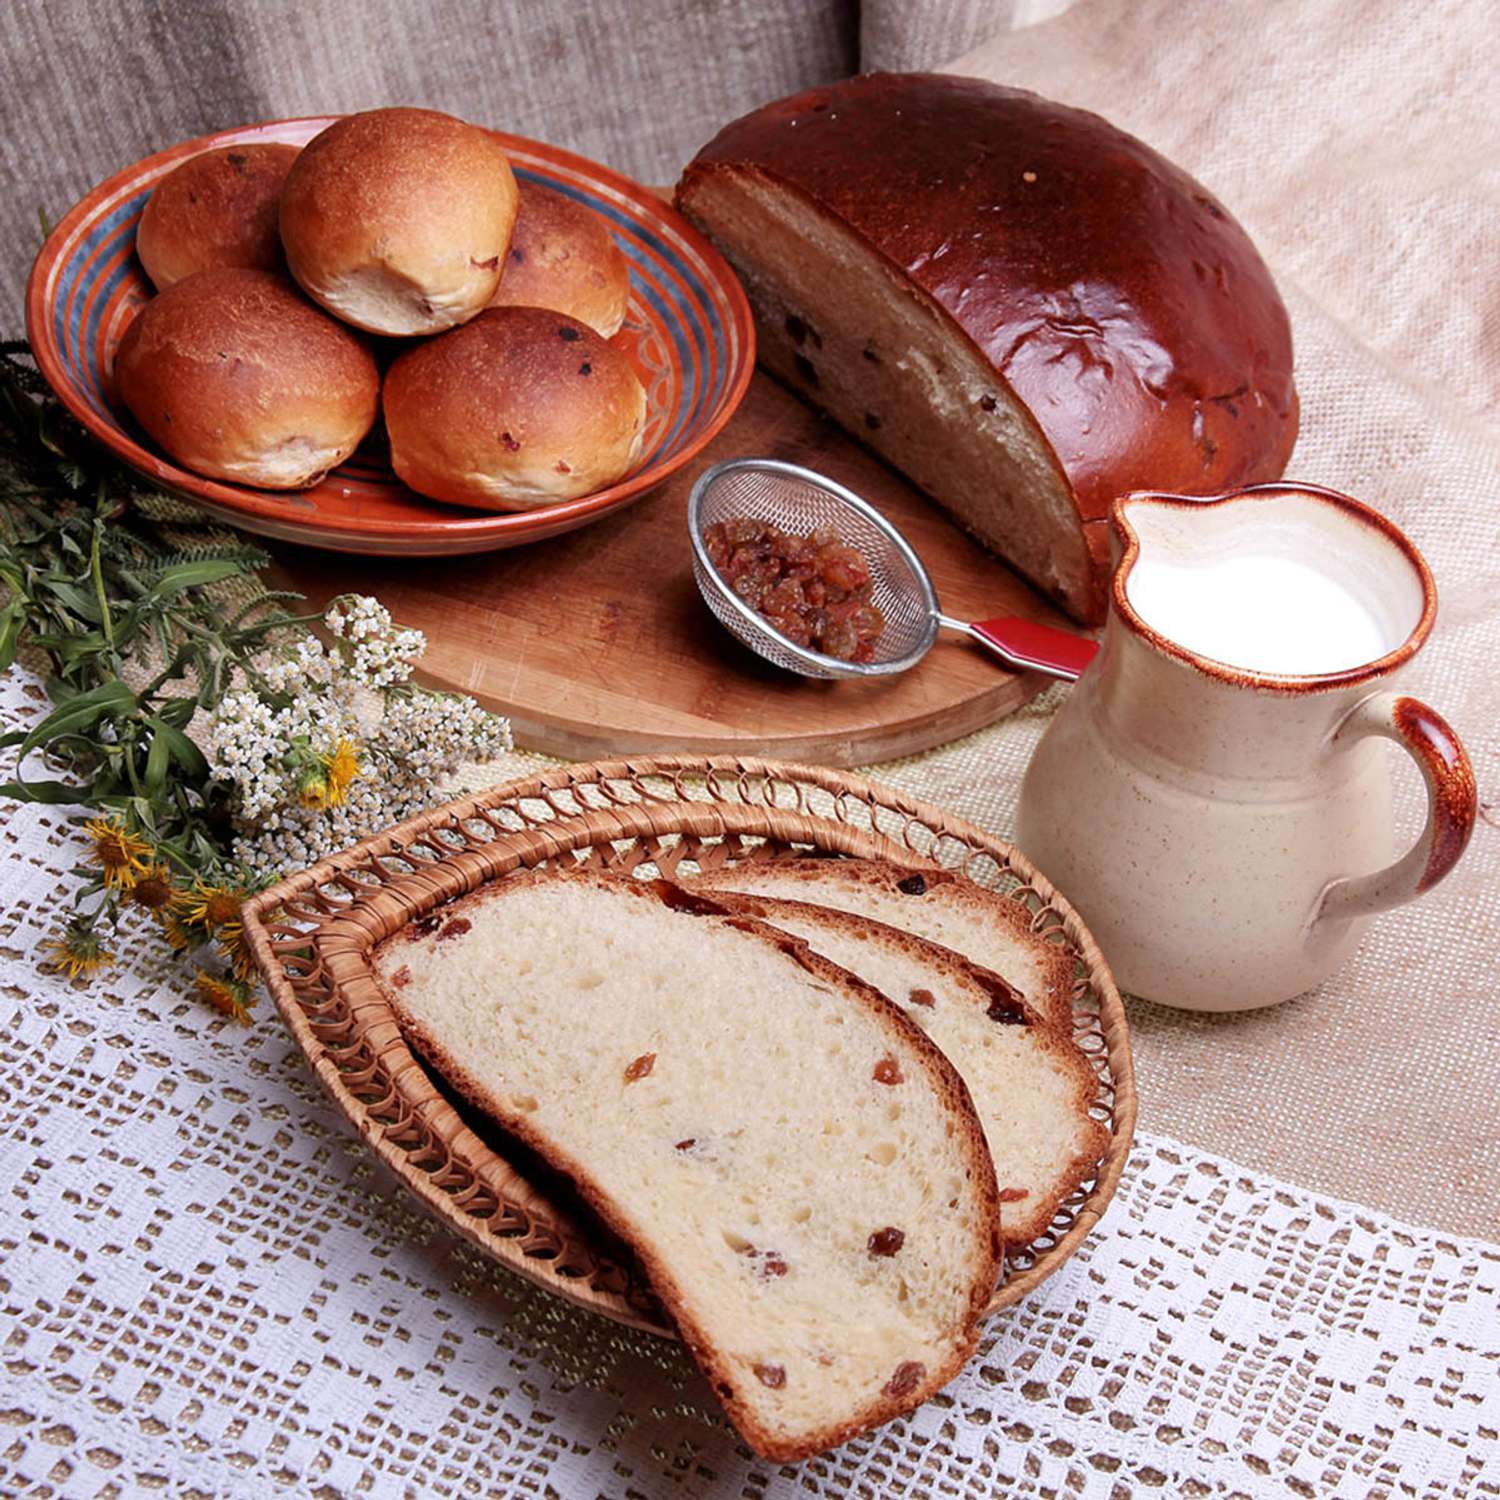 Бабушкин хлеб С. Пудовъ С изюмом и корицей 500 г - фото 4